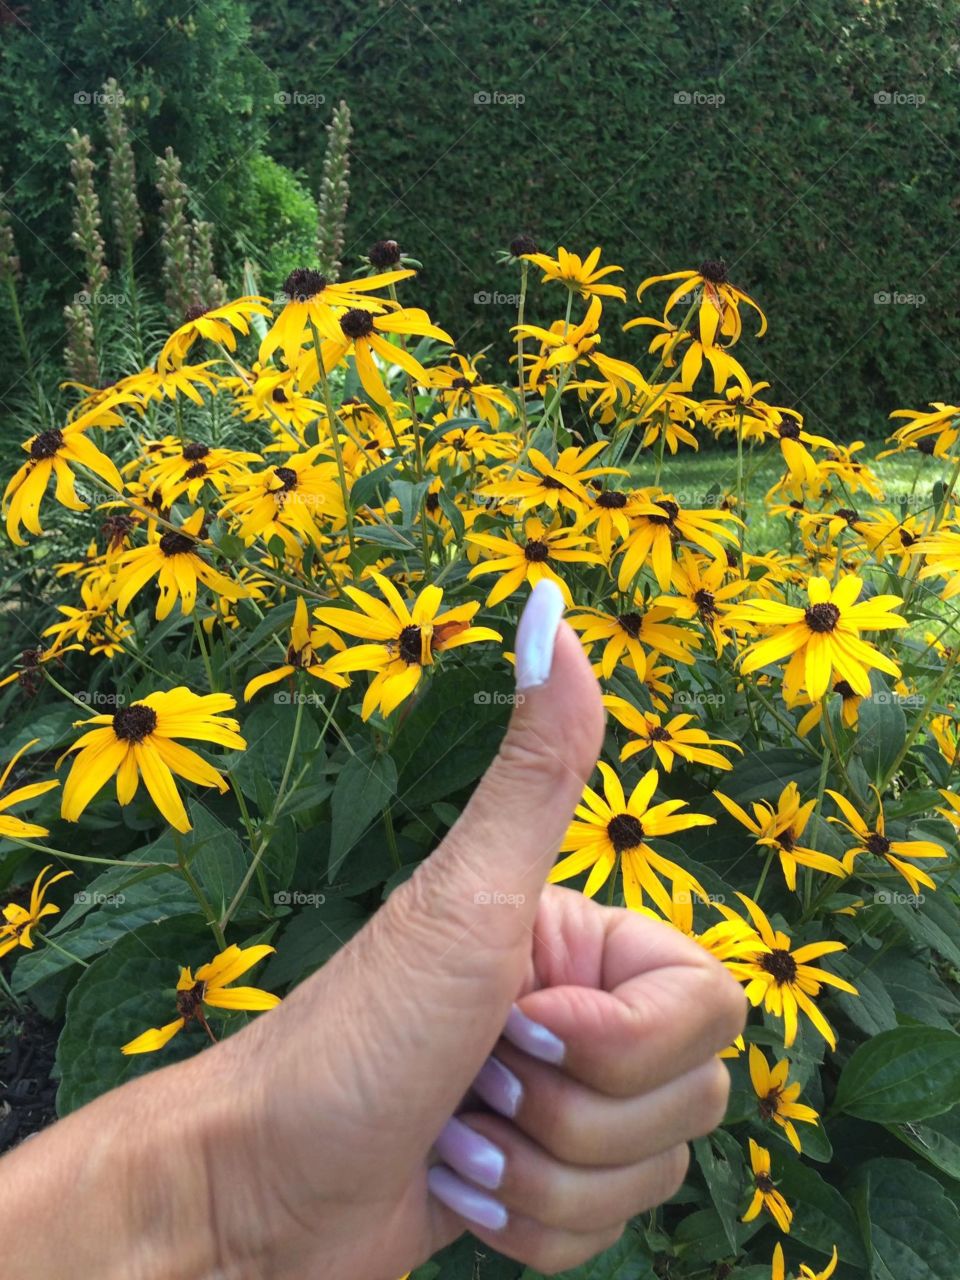 Thumbs up! Blackeyed Susan full bloom!
